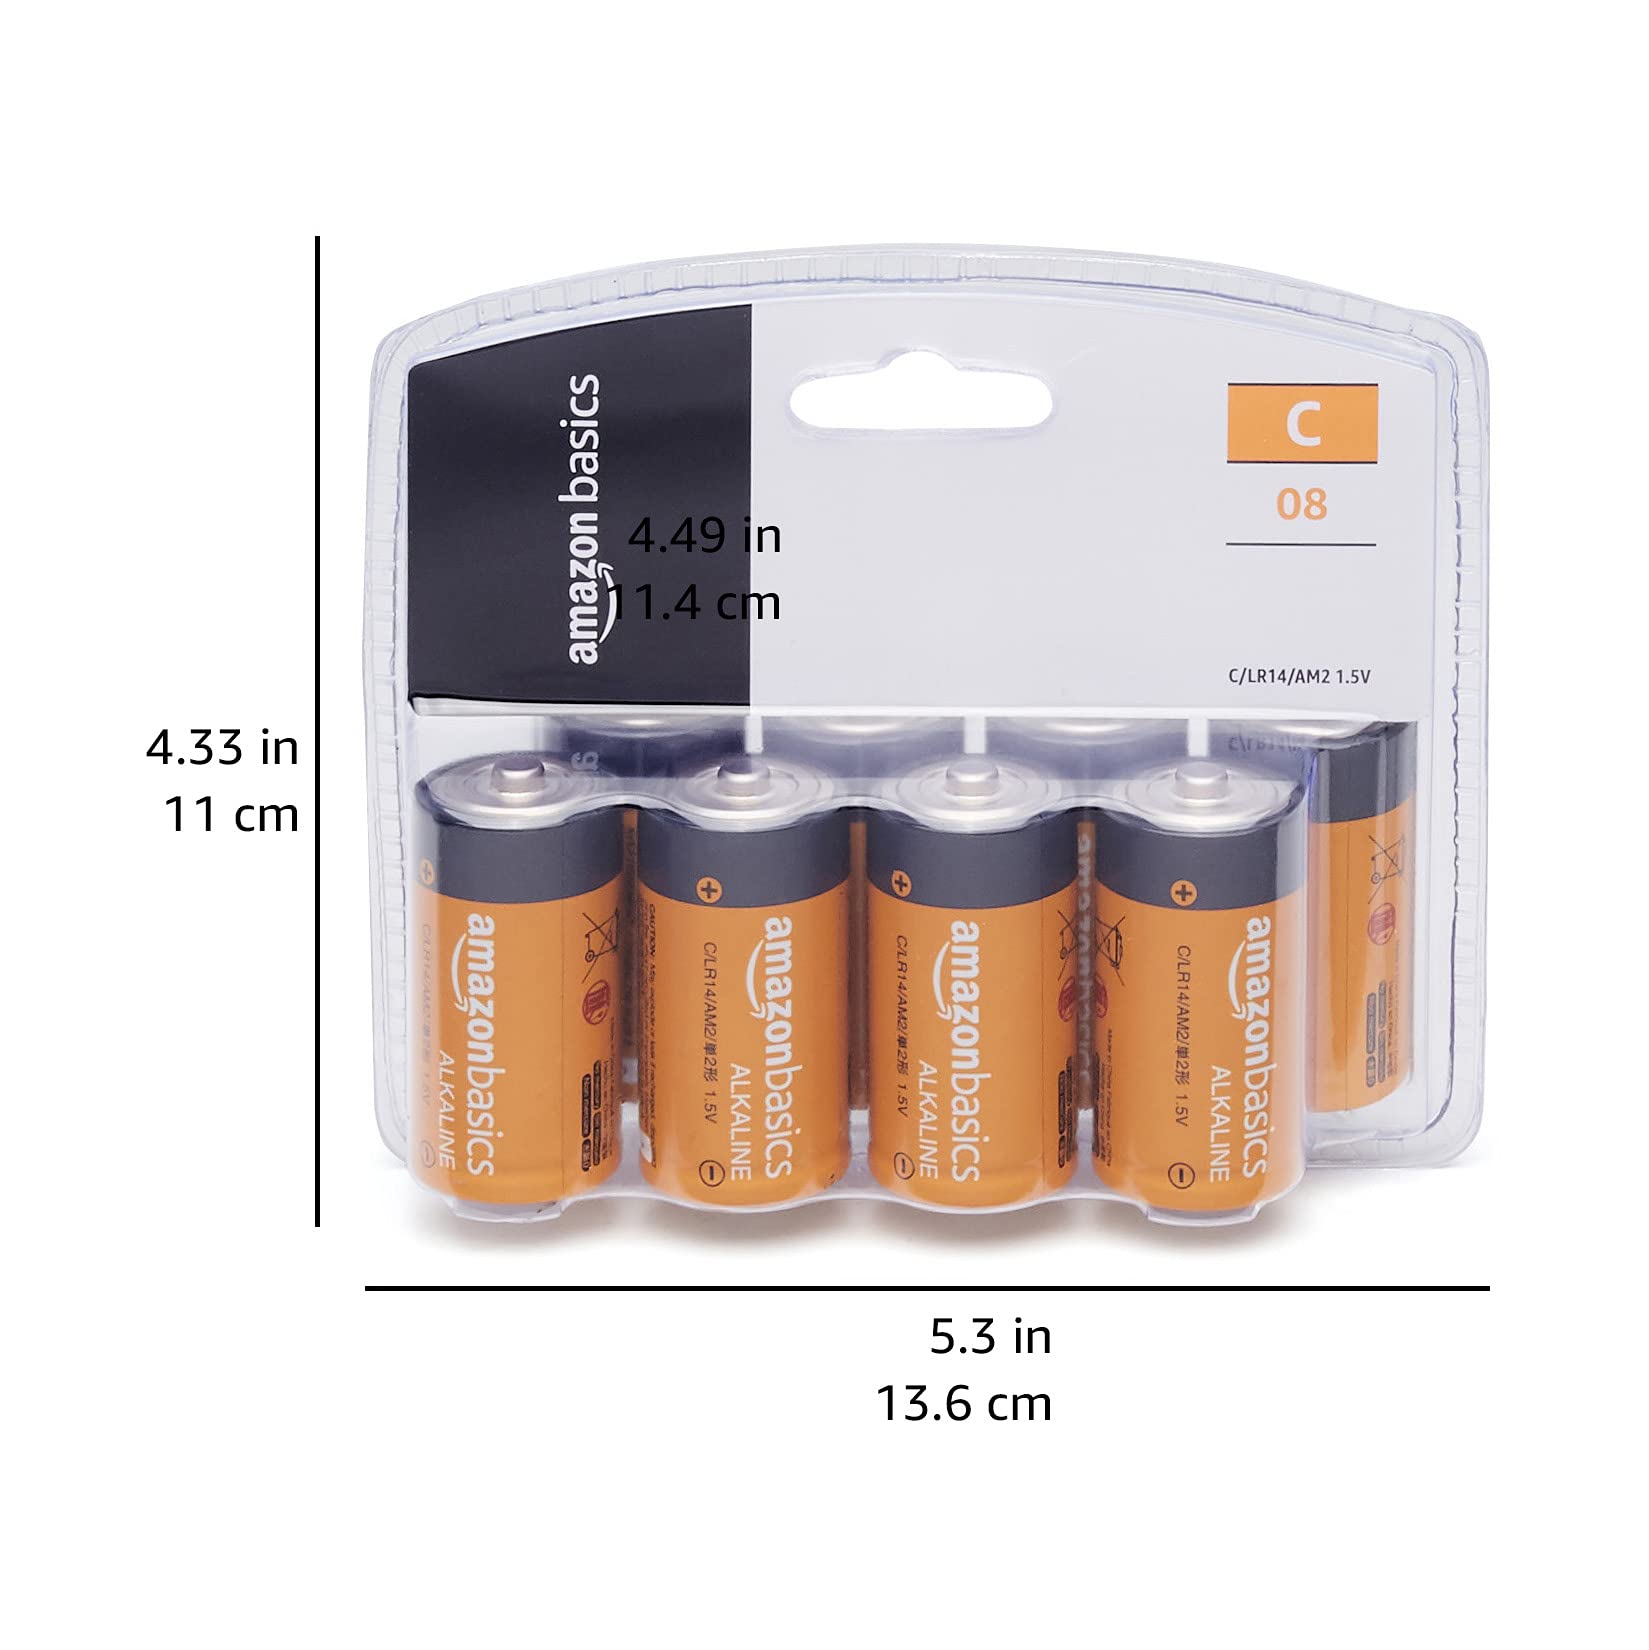 Amazon Basics 8-Pack C Cell Alkaline All-Purpose Batteries, 1.5 Volt, 5-Year Shelf Life